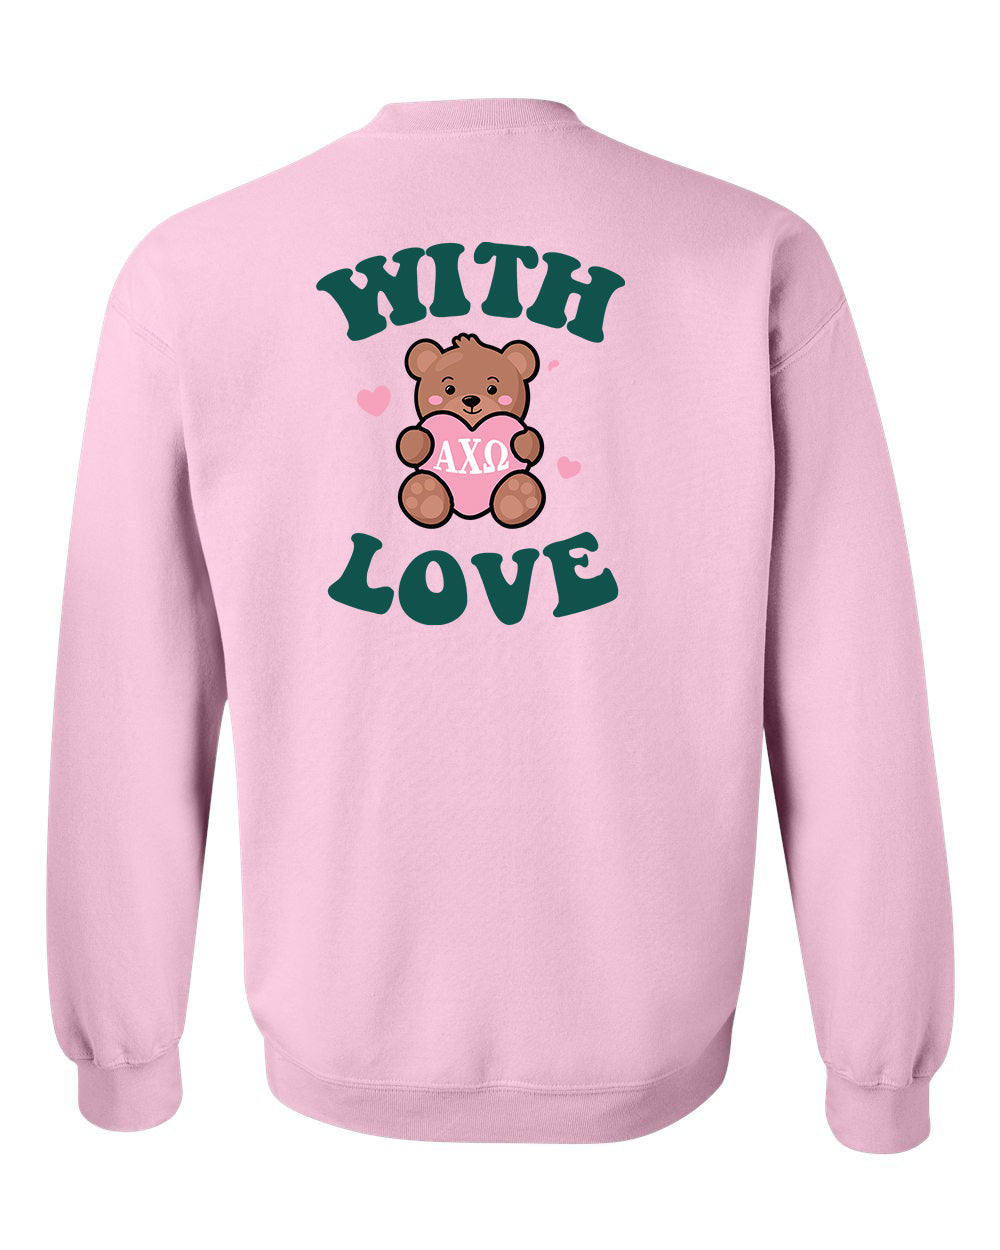 a pink sweatshirt with a teddy bear on it